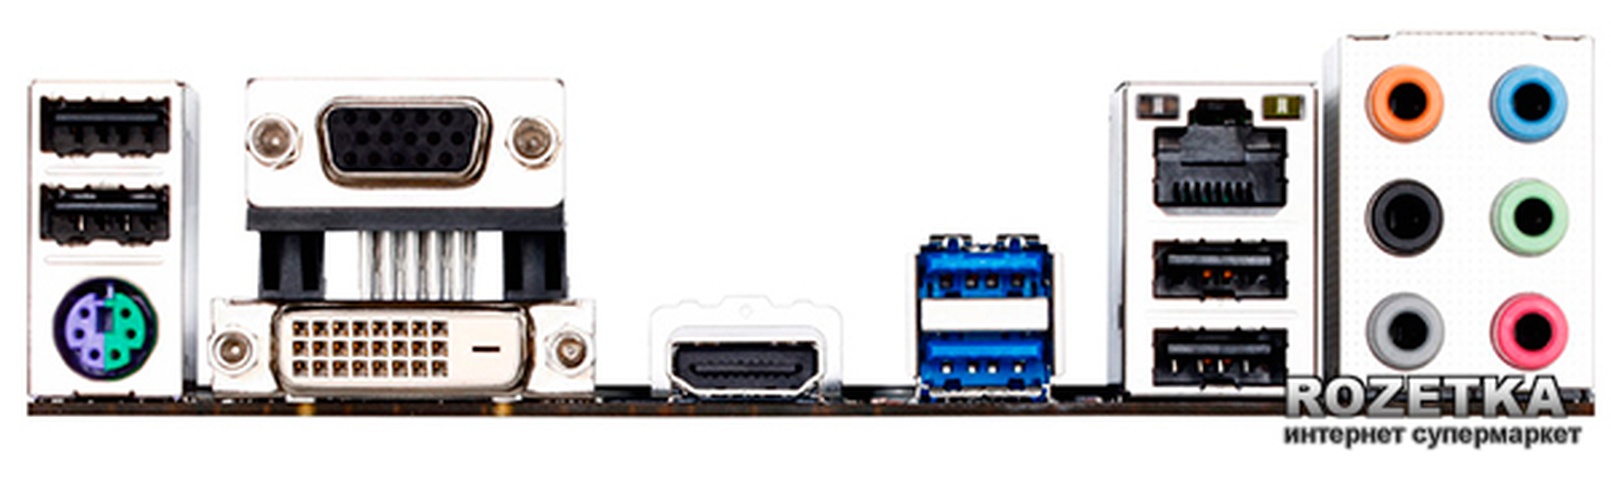 б\в Материнська плата GIGABYTE GA-B85M-D3H (s1150, B85 Express, 4*DDR3-1600, VC - Intel HD Graphics (Integrated in CPU), 1xPCI-E16x, 2xPCI, 4xSATA3, 2xSATA2, 2xUSB 3.0, 4xUSB 2.0, HDMI, DVI-D, D-Sub, LAN, AMD CrossFire) Micro ATX